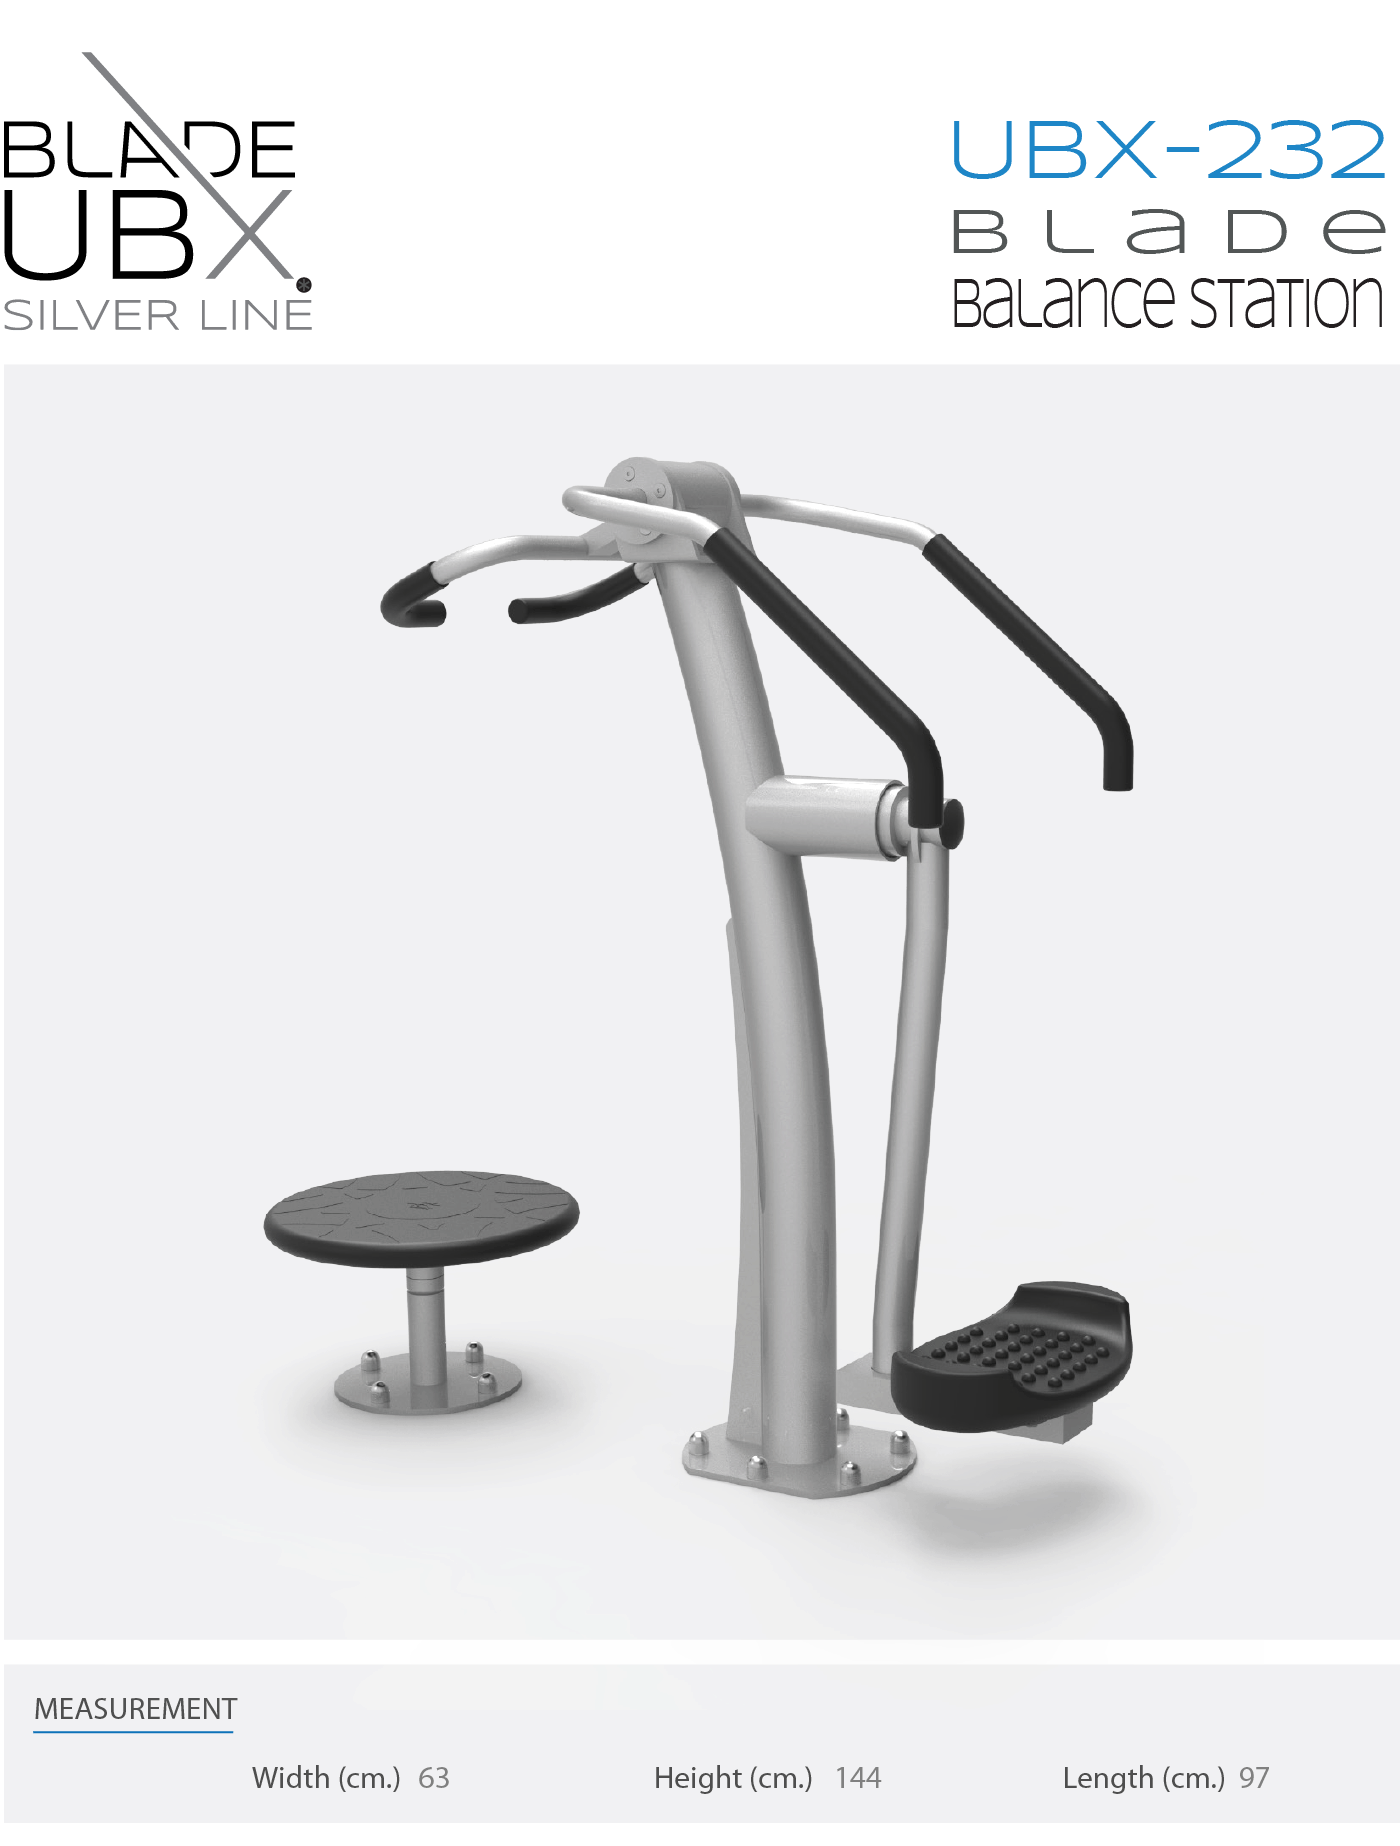 ubx-232 blade balance station - אורבניקס - מתקן כושר - תחנת איזון להבים